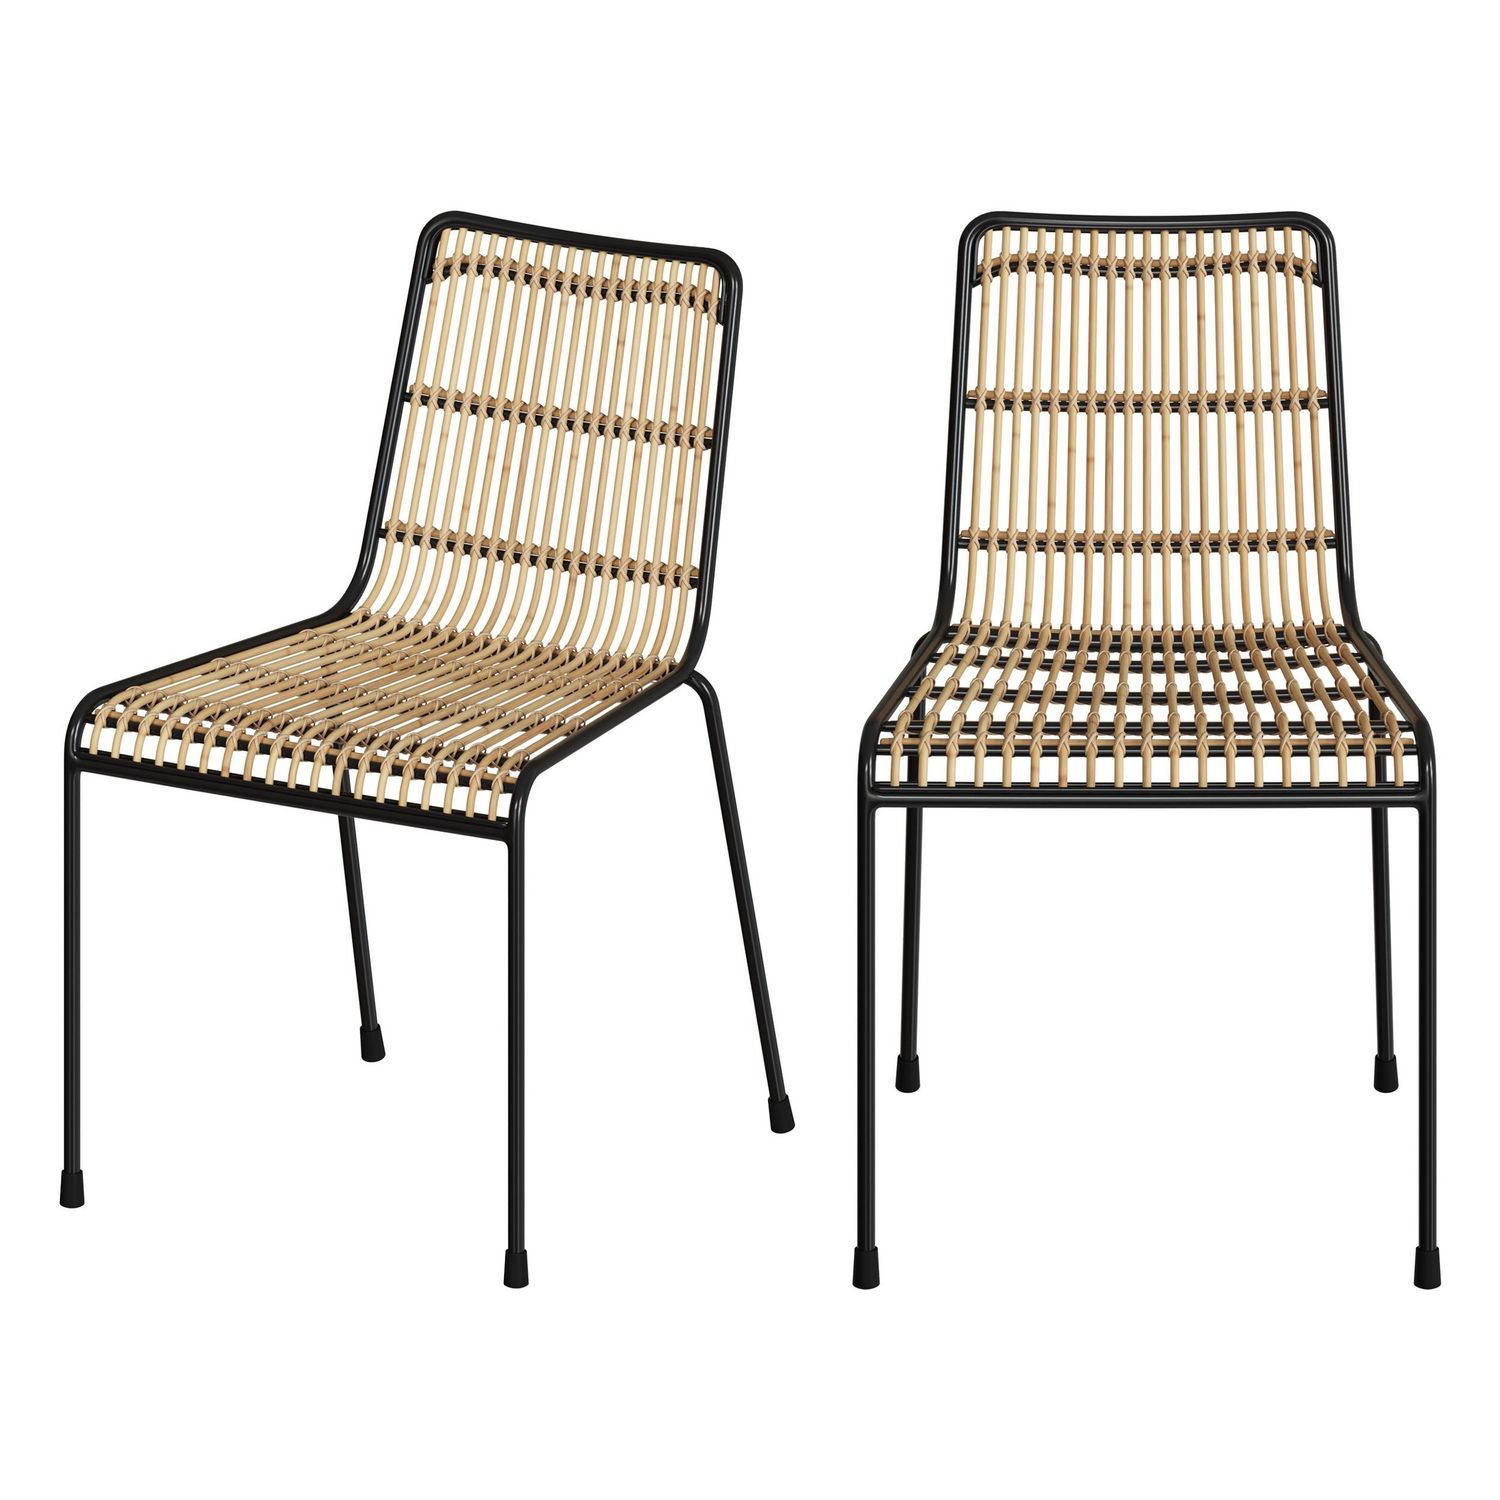 Chaise en rotin naturel et pieds en métal (lot de 2) - tamara